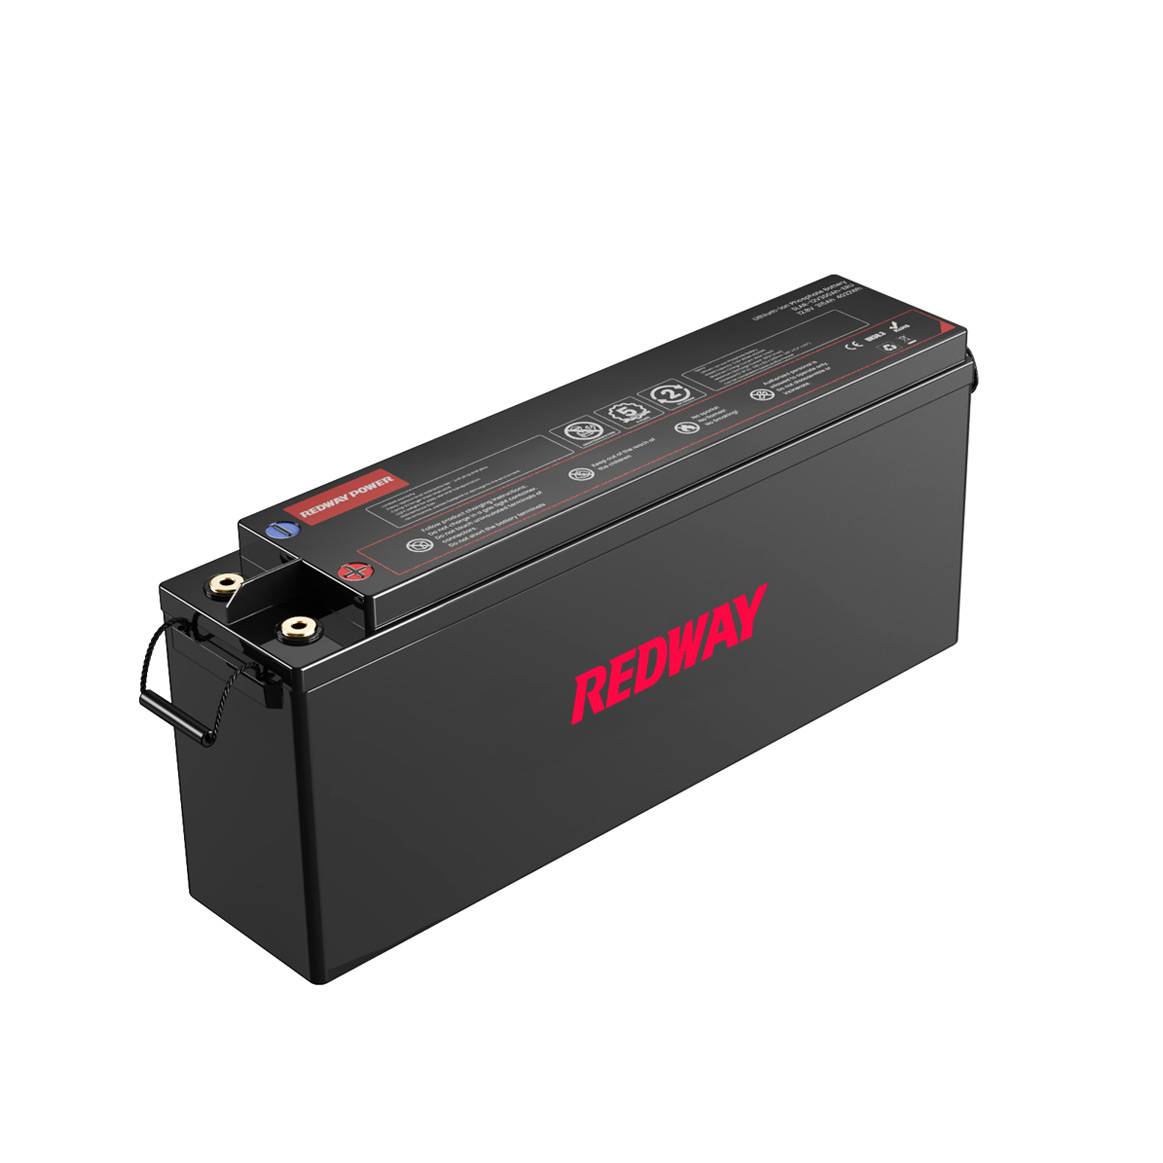 redway-12v180ah-eu 12V 180Ah Lithium Battery (EU)